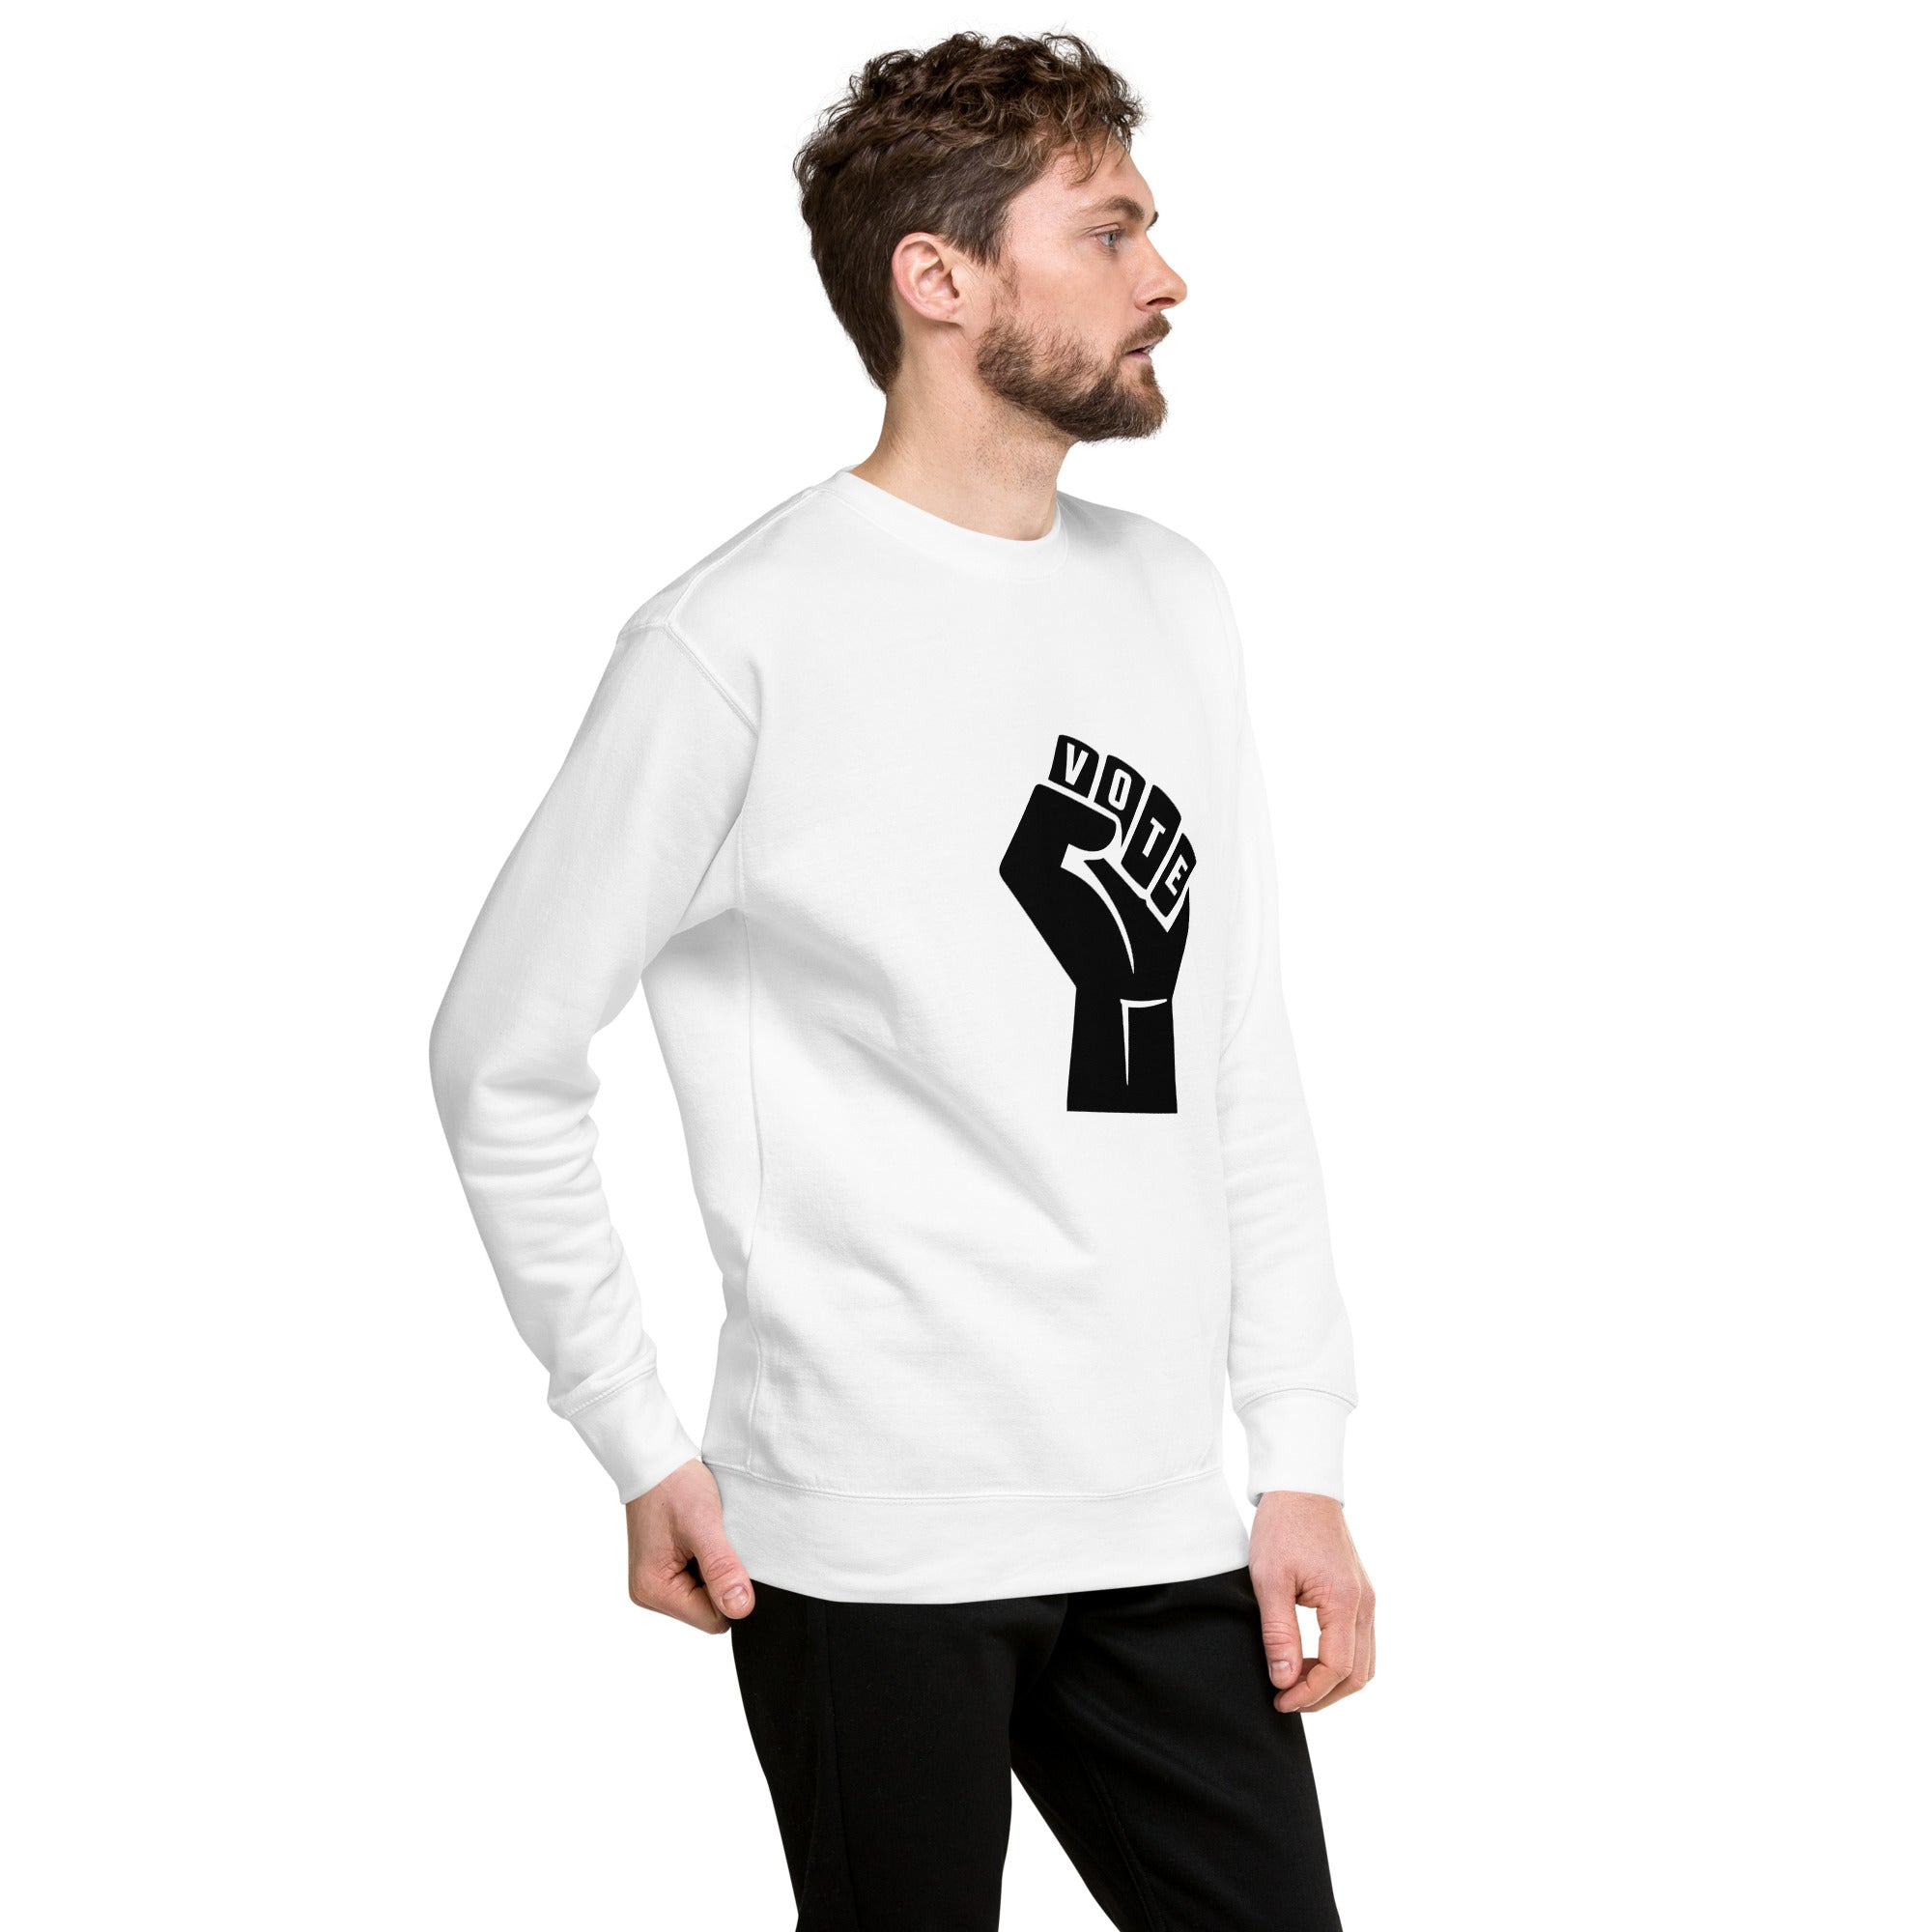 VOTE POWER- Unisex Premium Sweatshirt